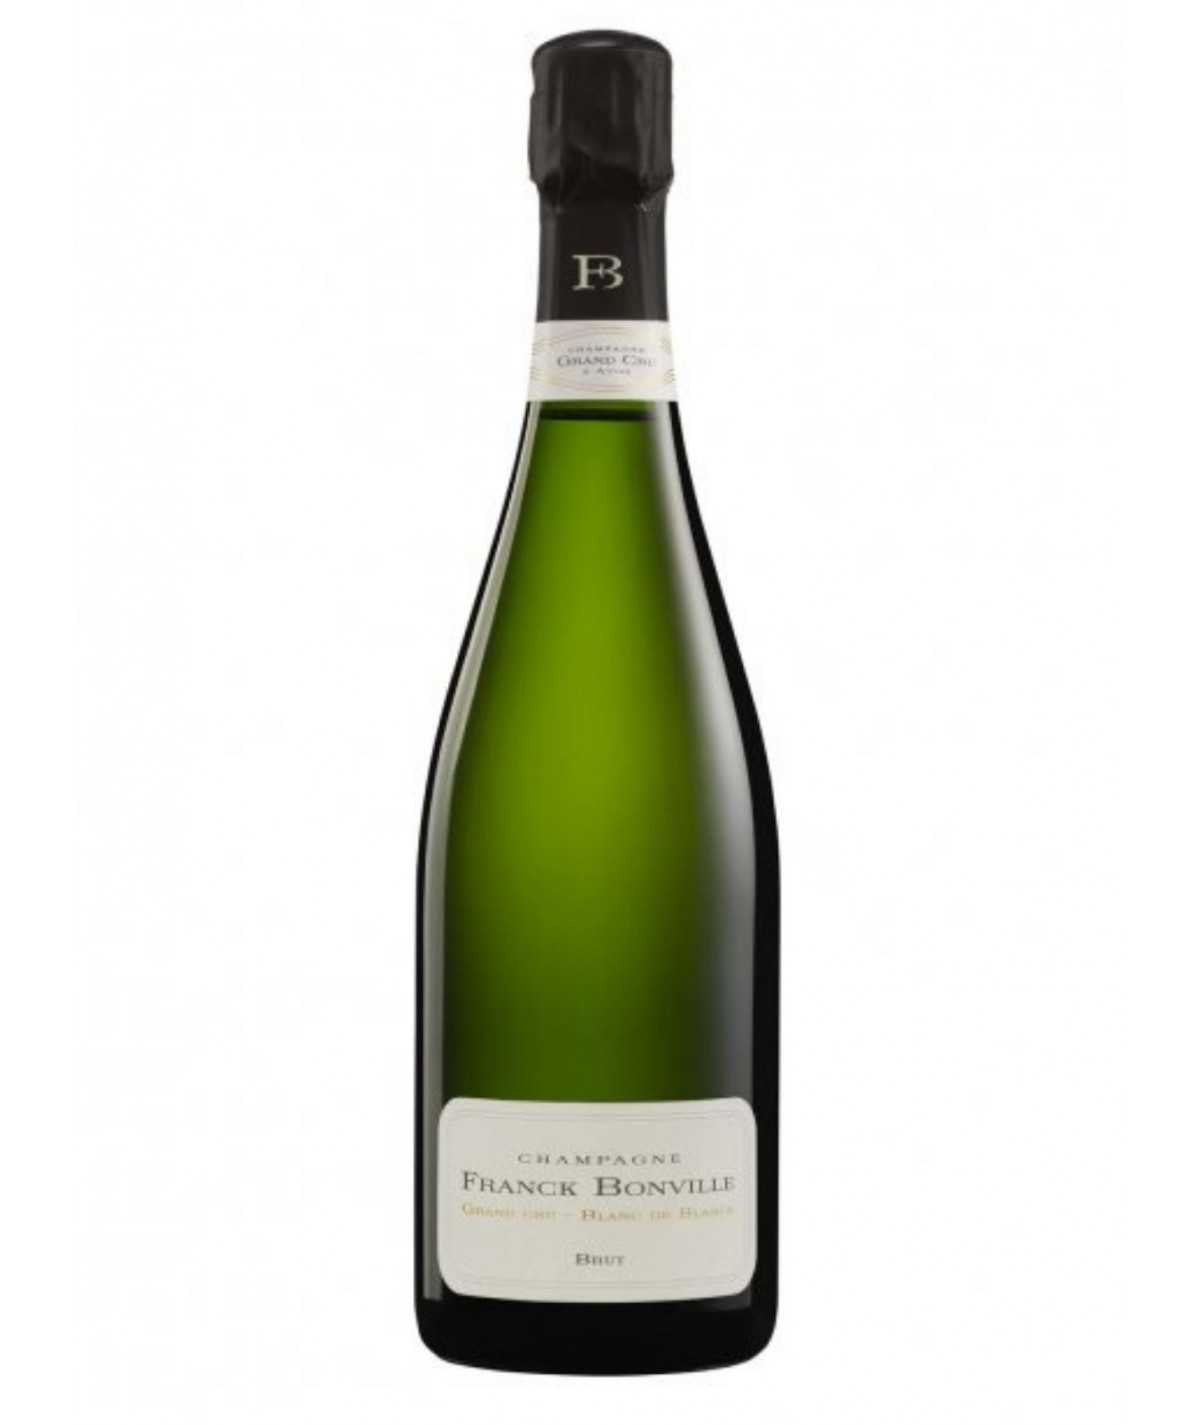 FRANCK BONVILLE Champagne Brut Grand Cru Blanc de Blancs